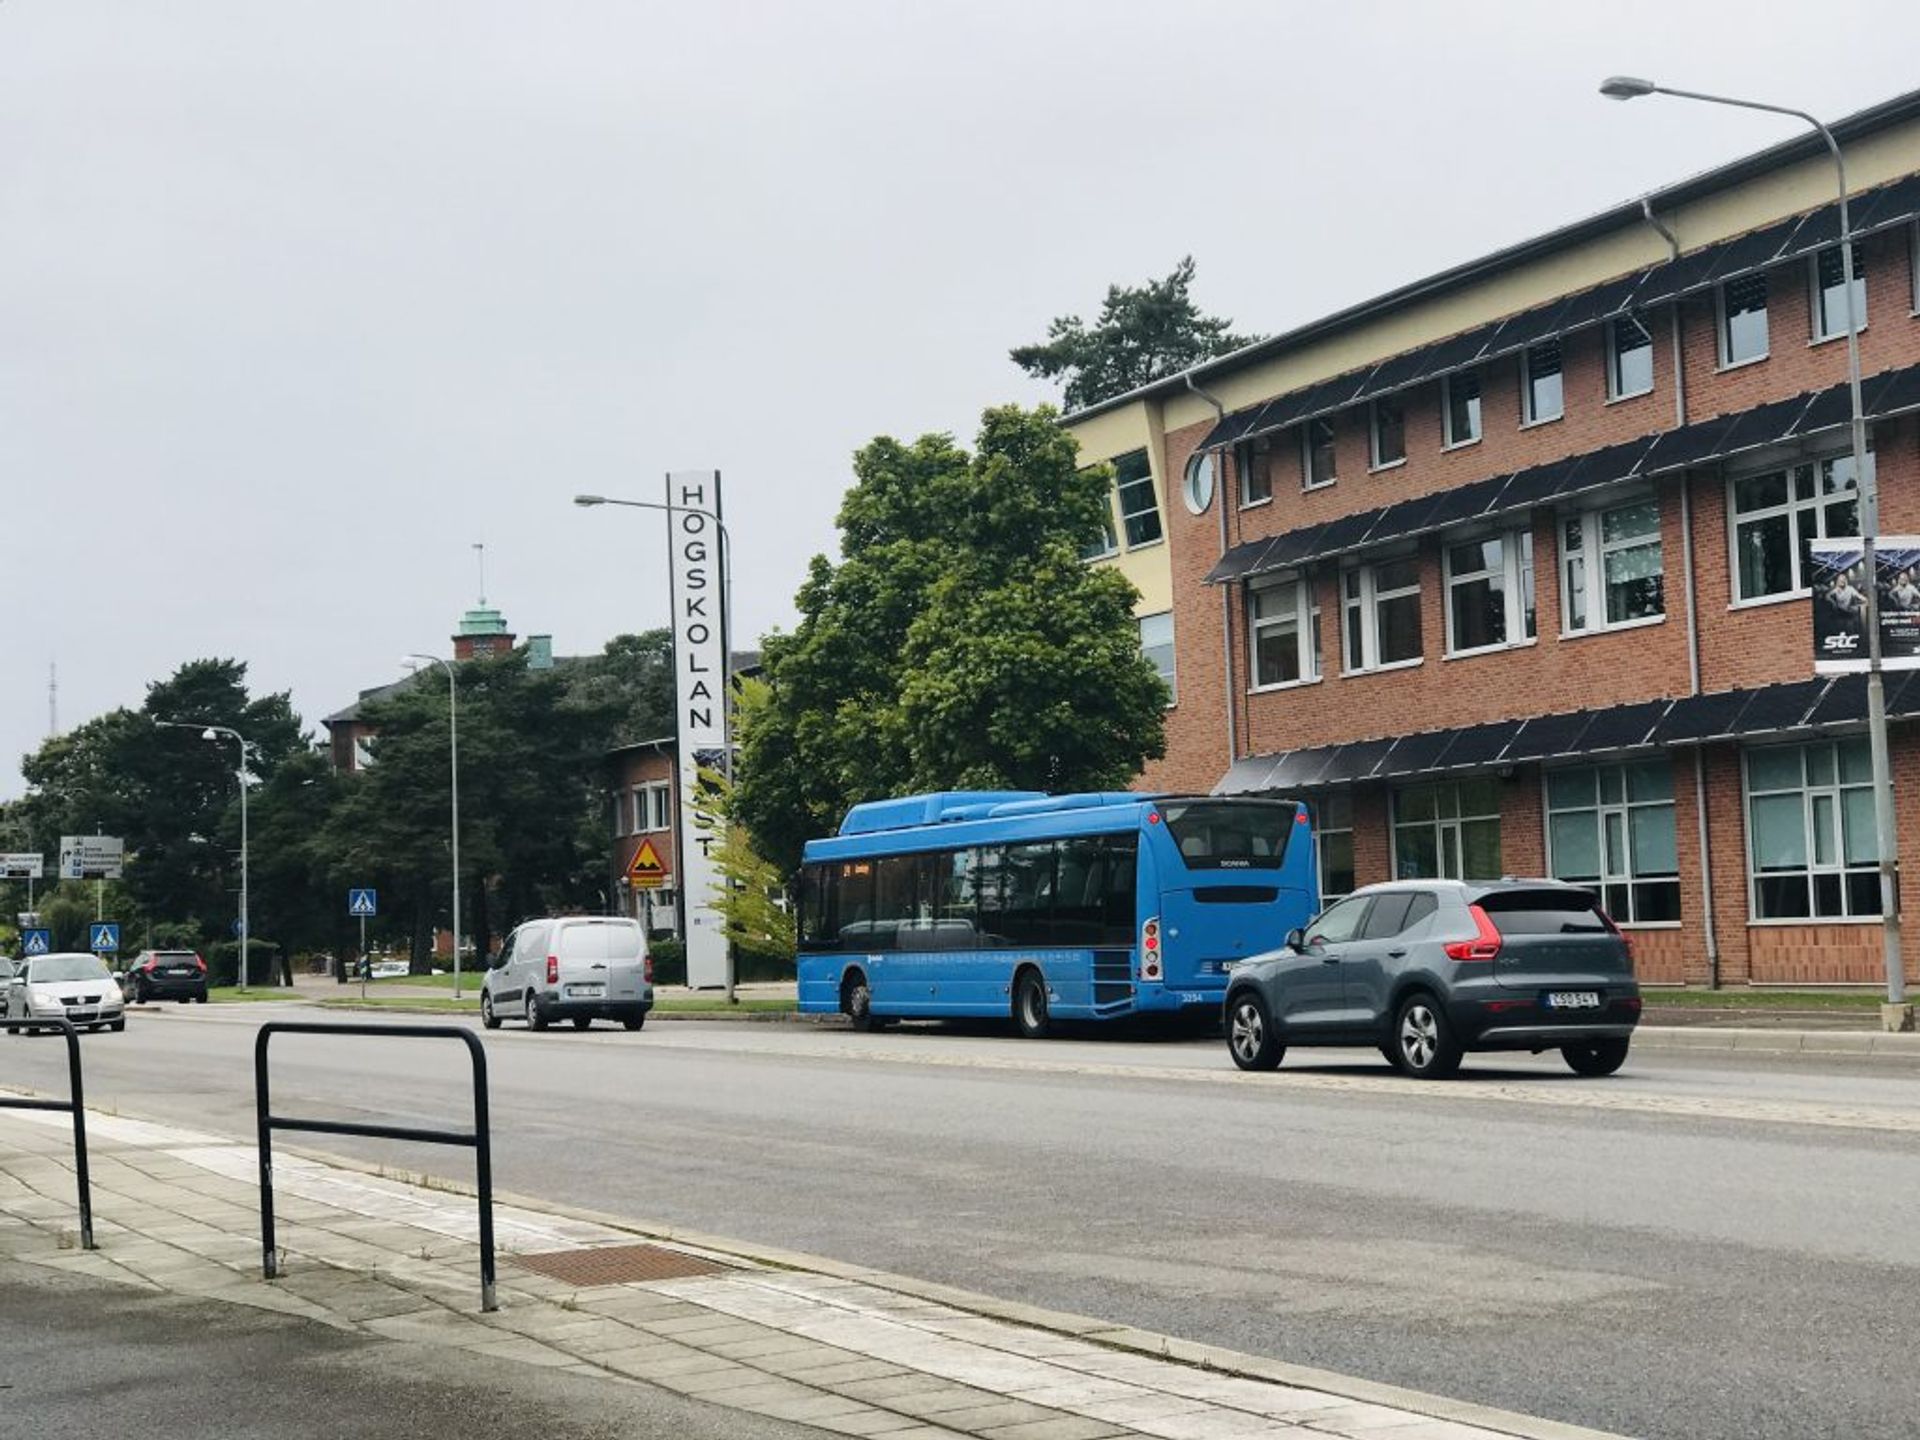 A bus parked outside a university